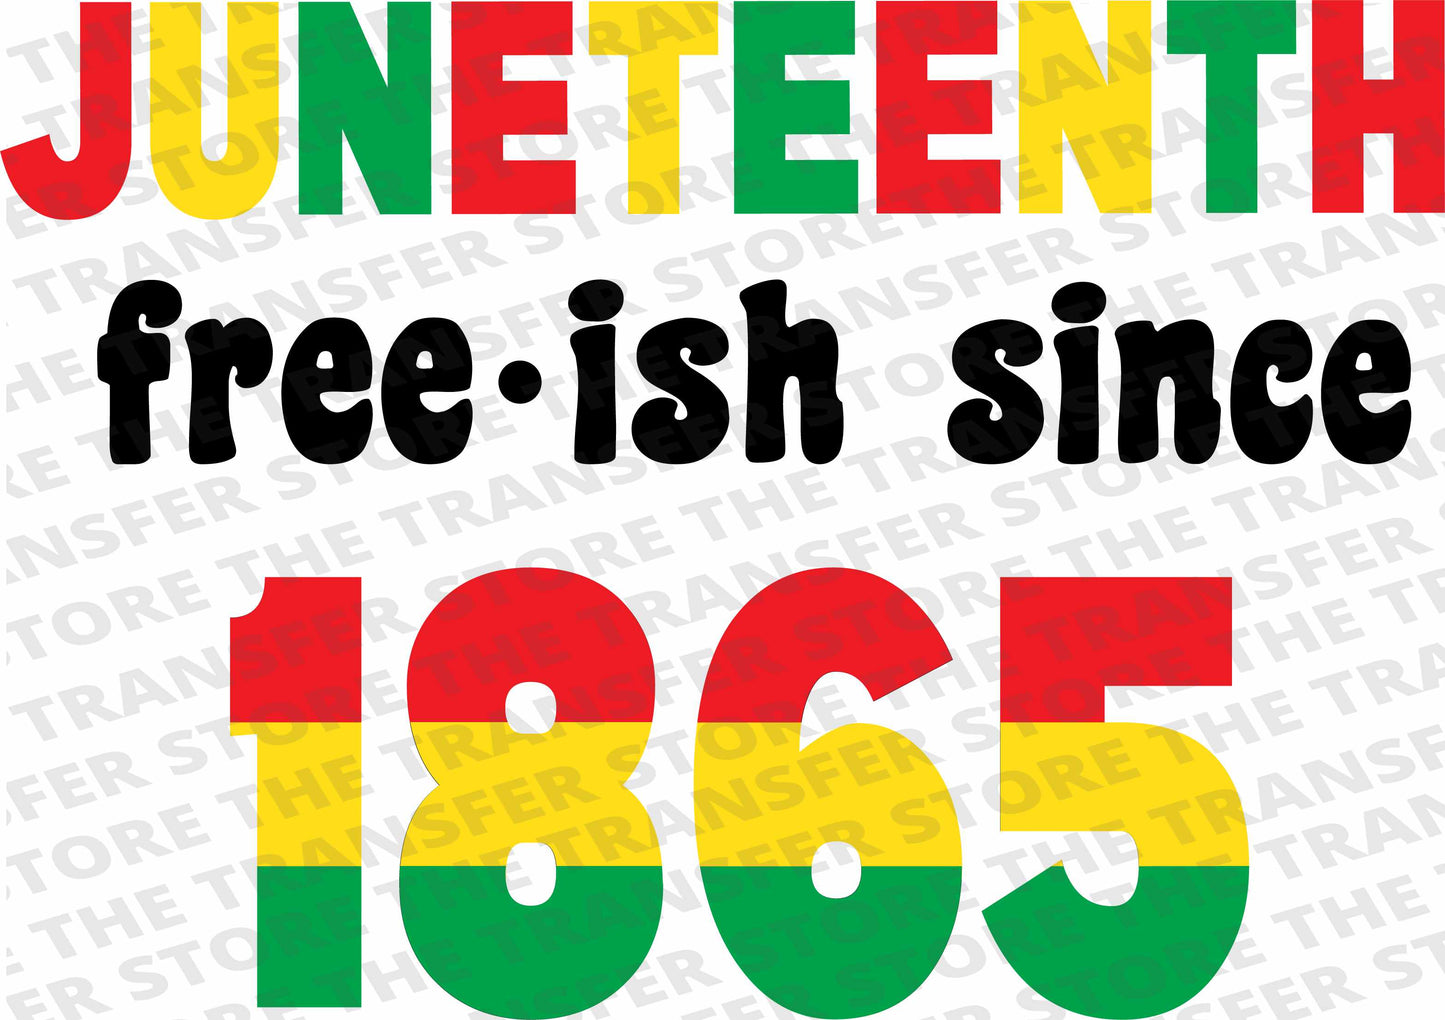 Juneteenth Free-Ish